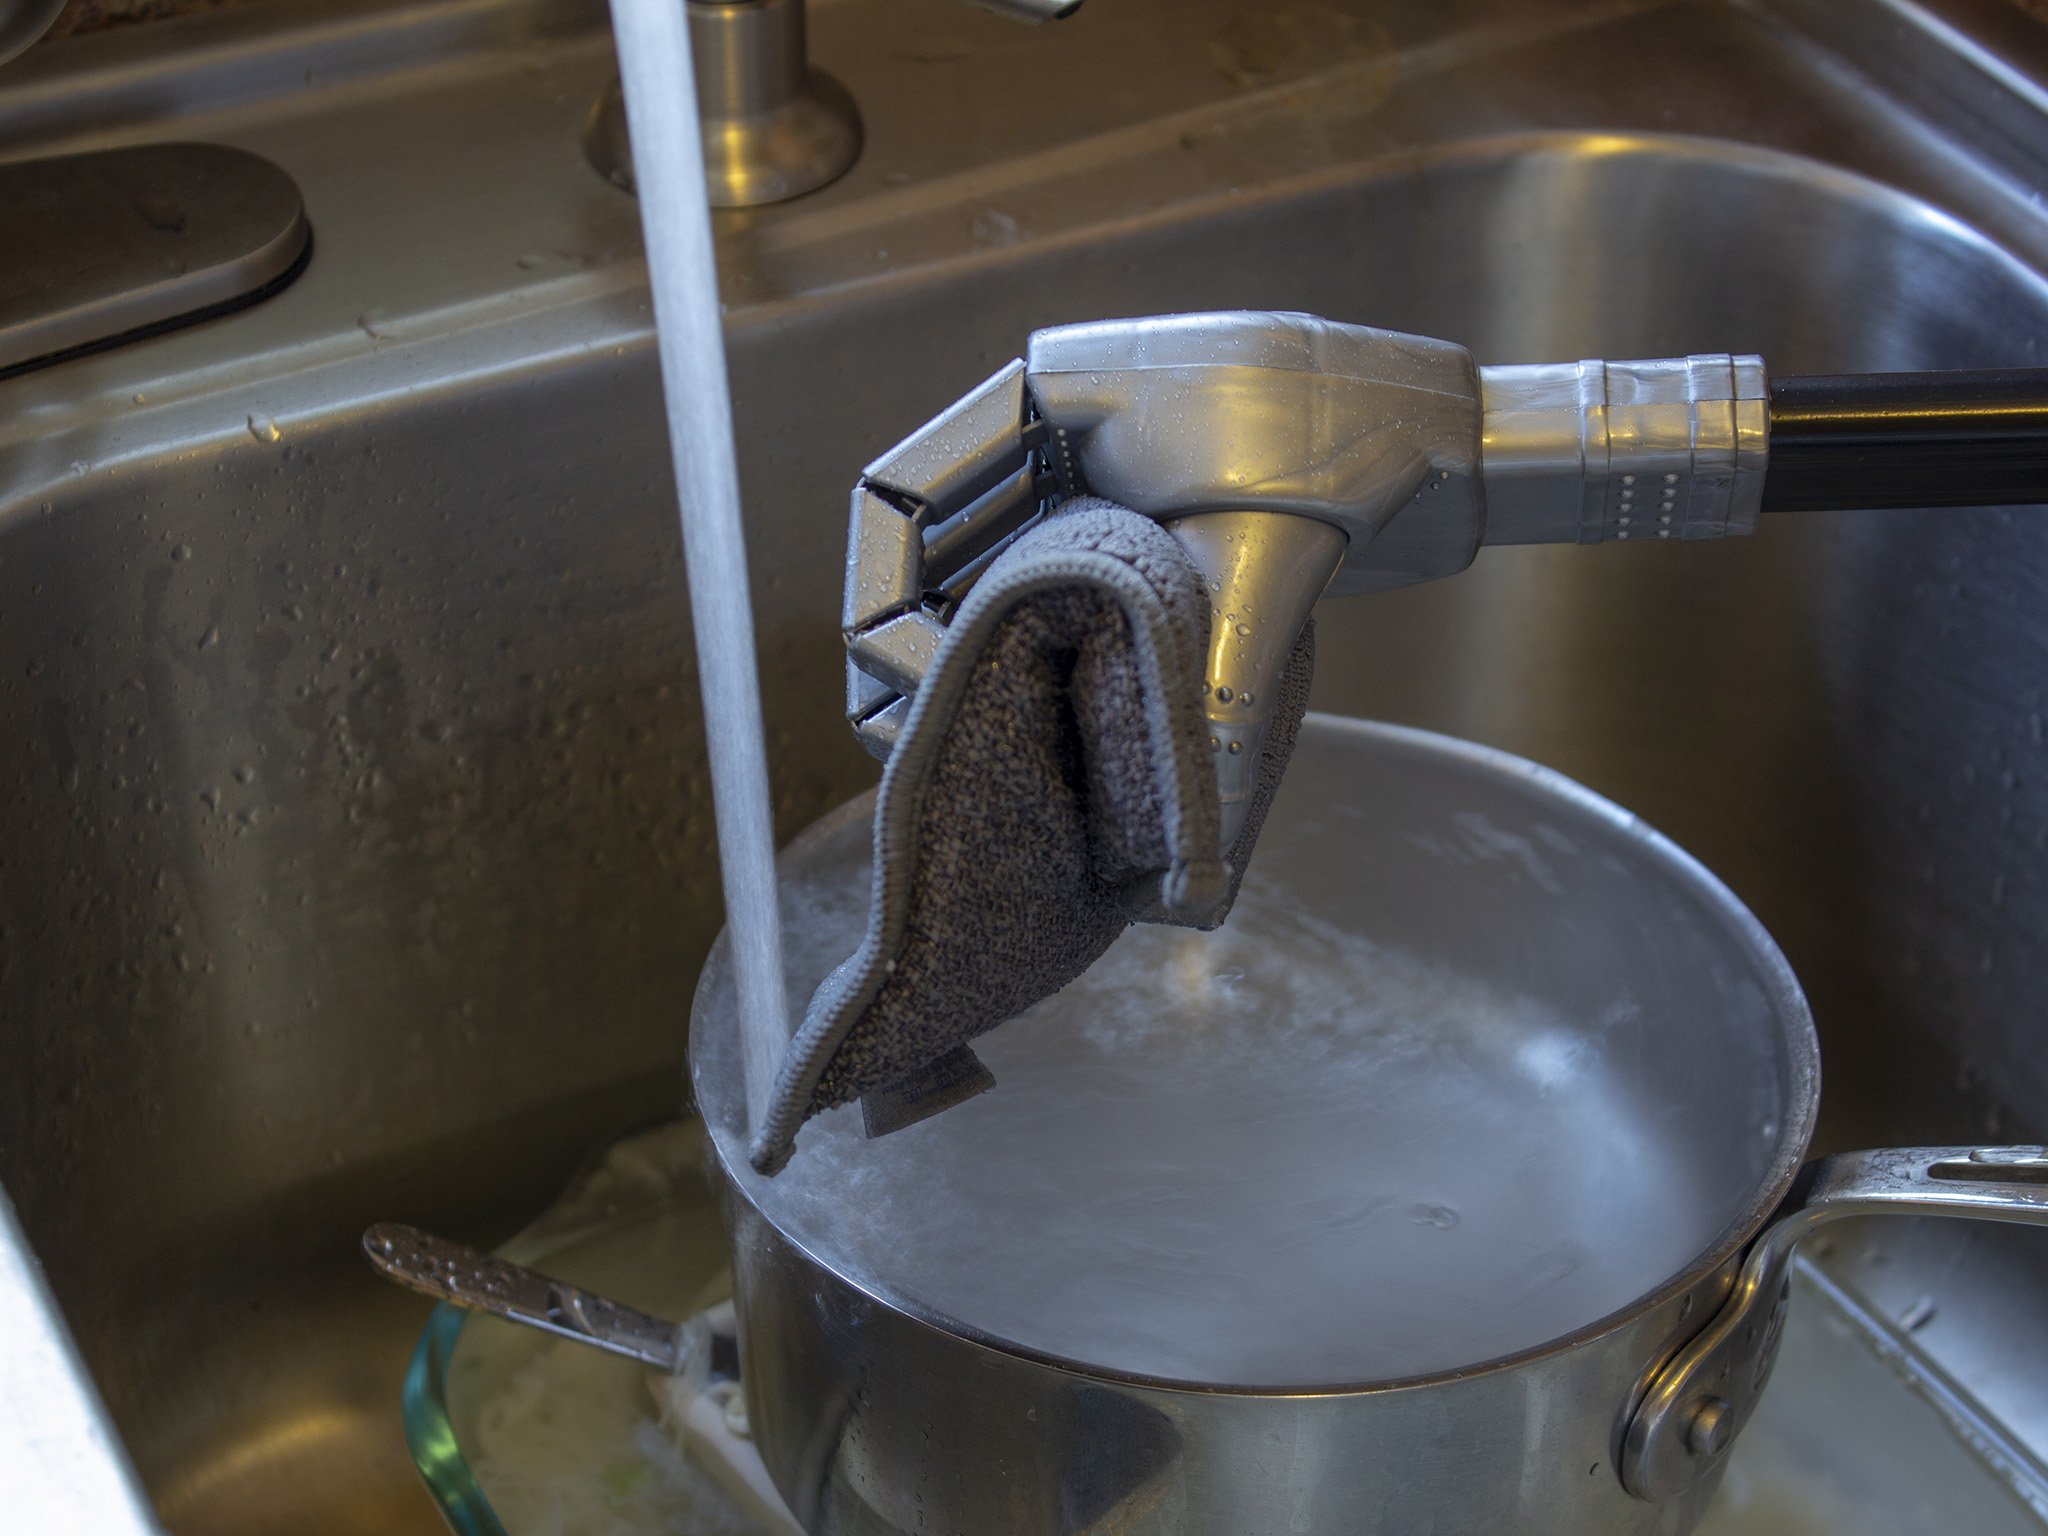 Robot Hand Washing Dishes